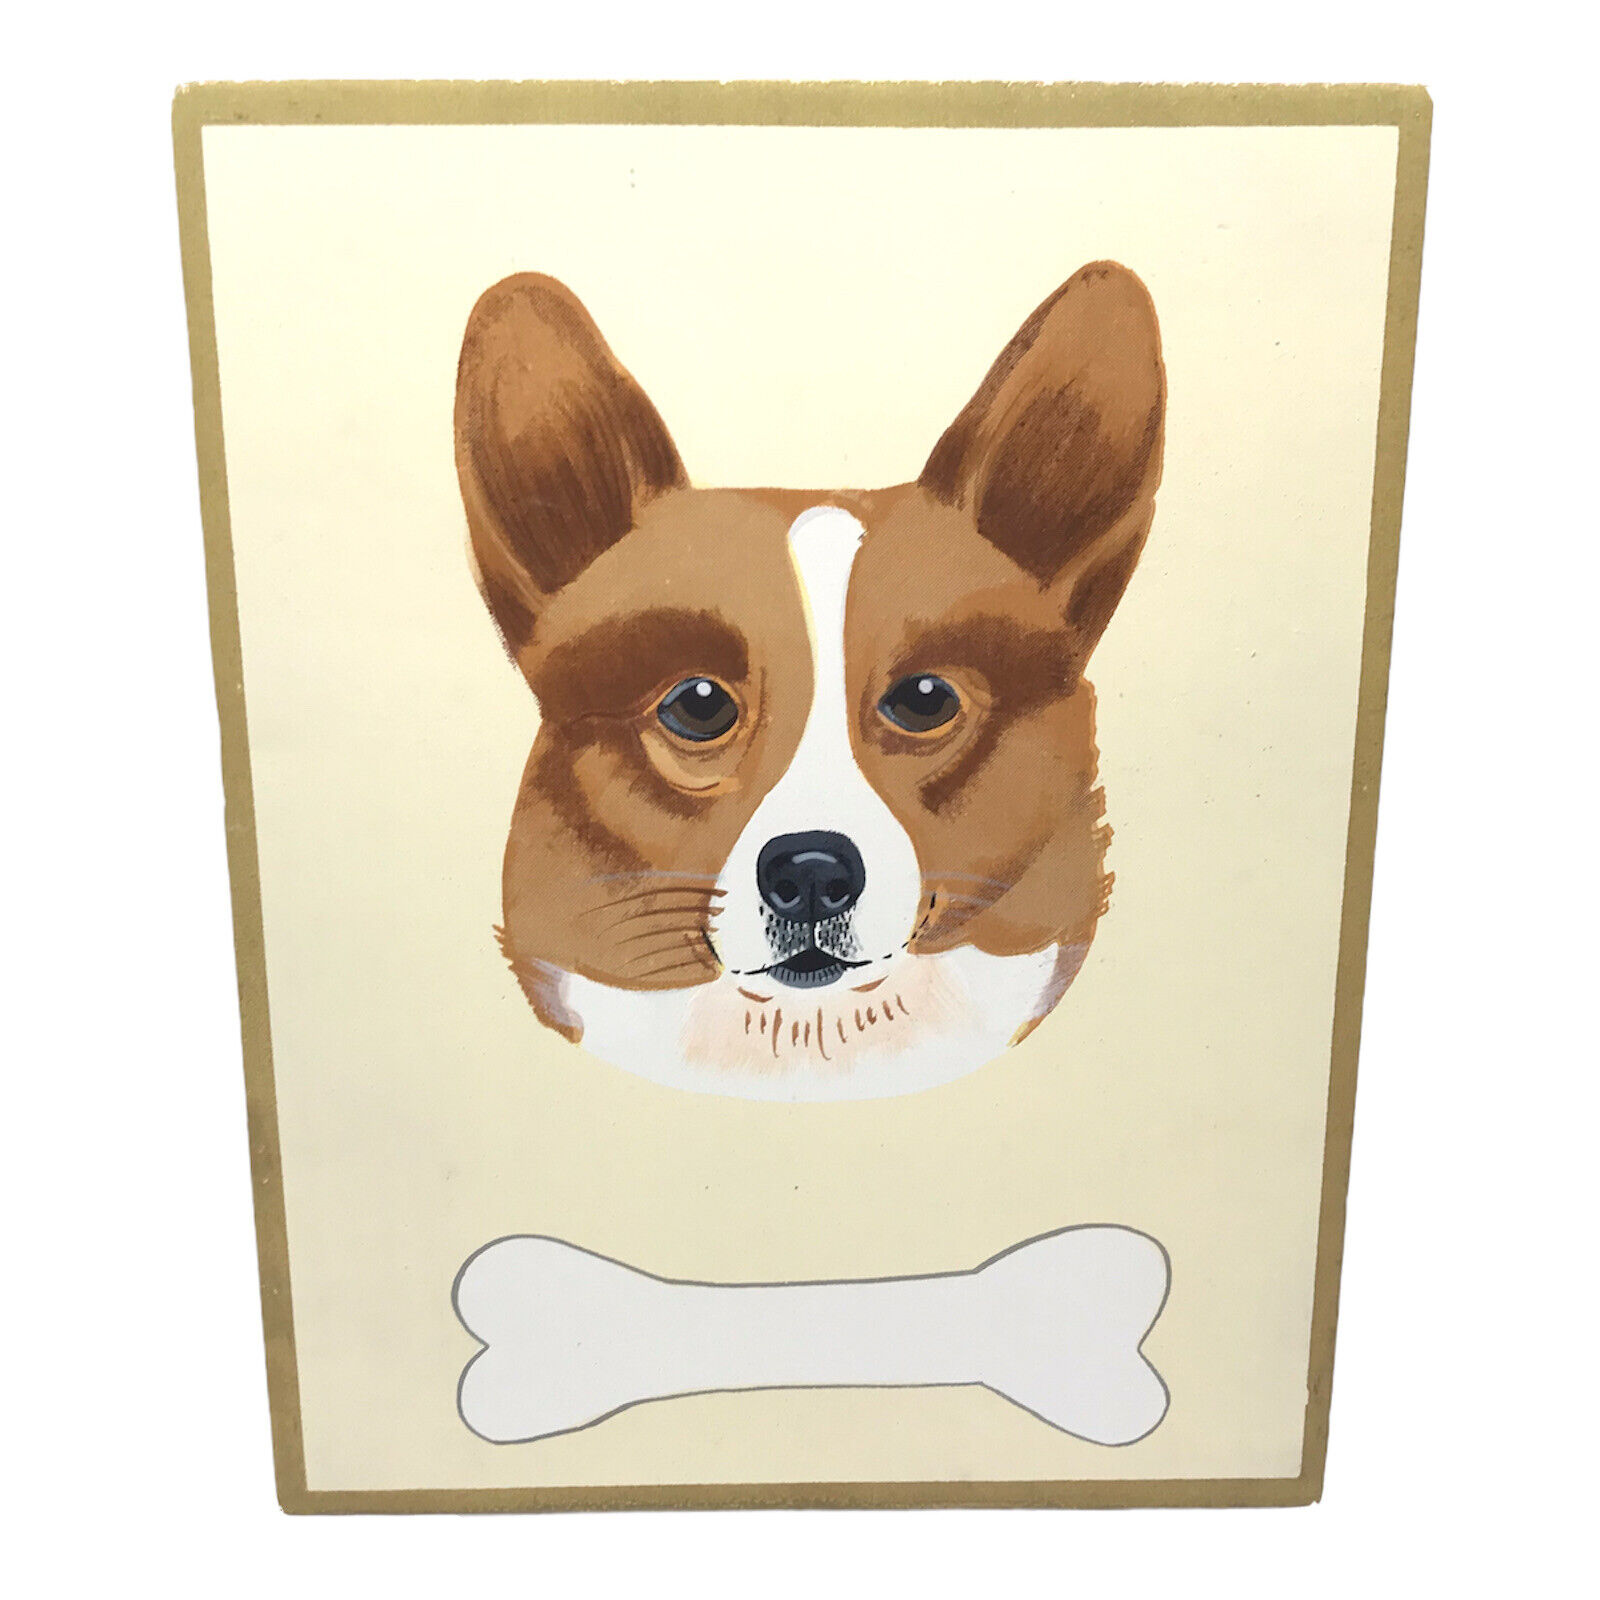 WELSH CORGI Dog Sign Wood Wall Hanging Plaque Puppy Bone Home Decor 8x6” NEW